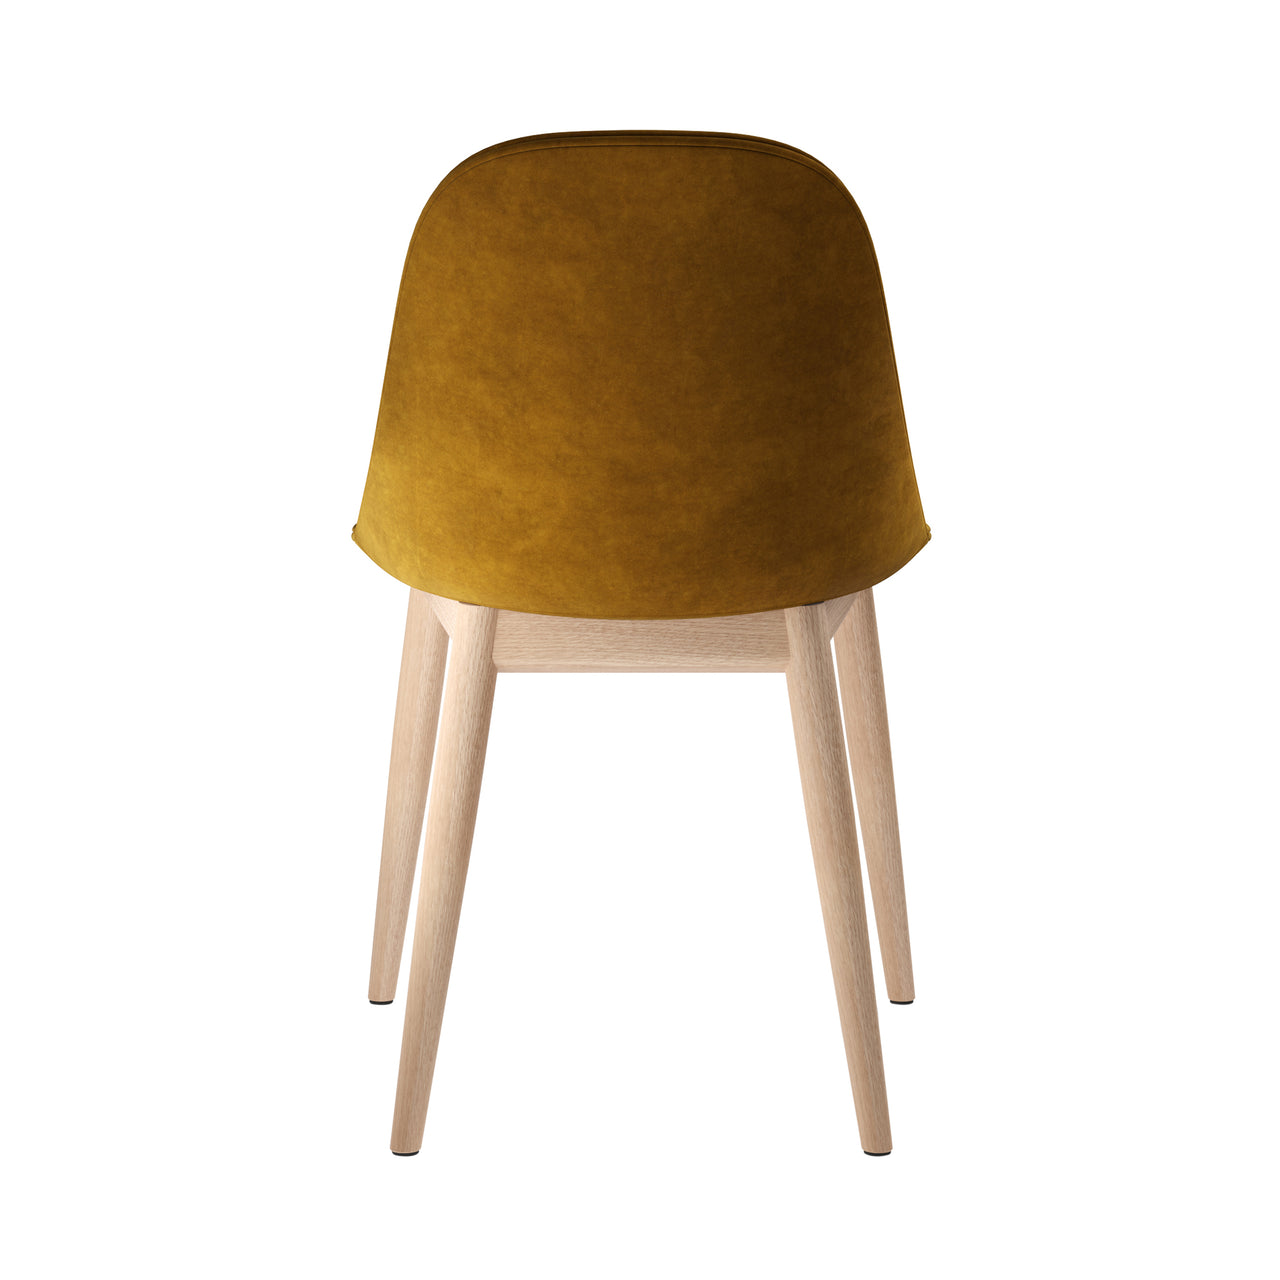 Harbour Side Chair: Wood Base Upholstered + Natural Oak